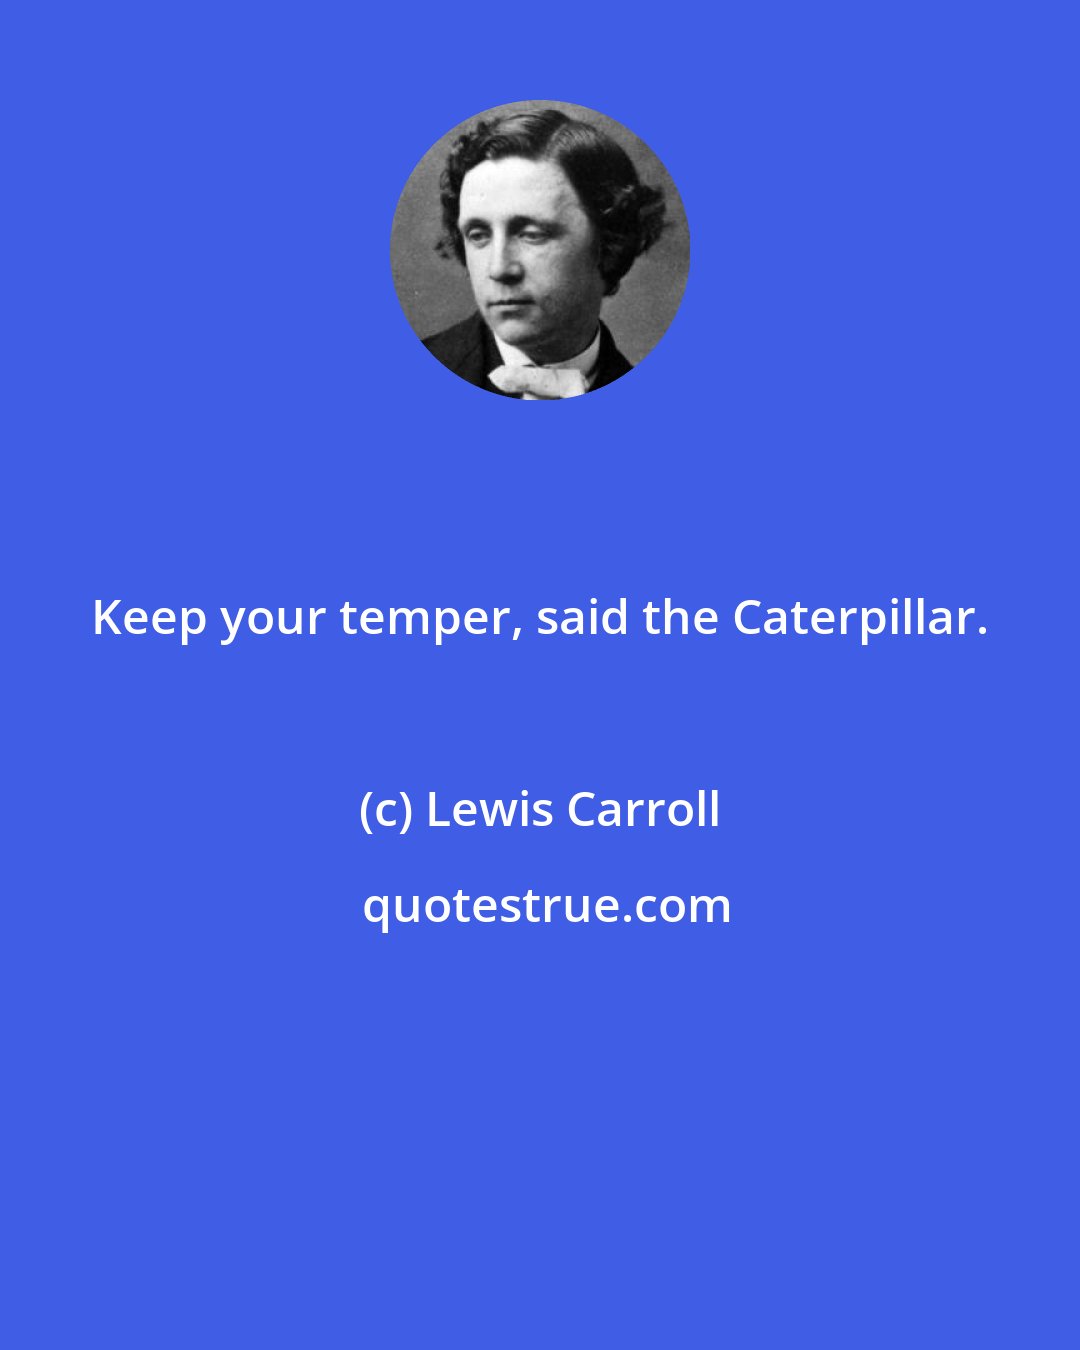 Lewis Carroll: Keep your temper, said the Caterpillar.